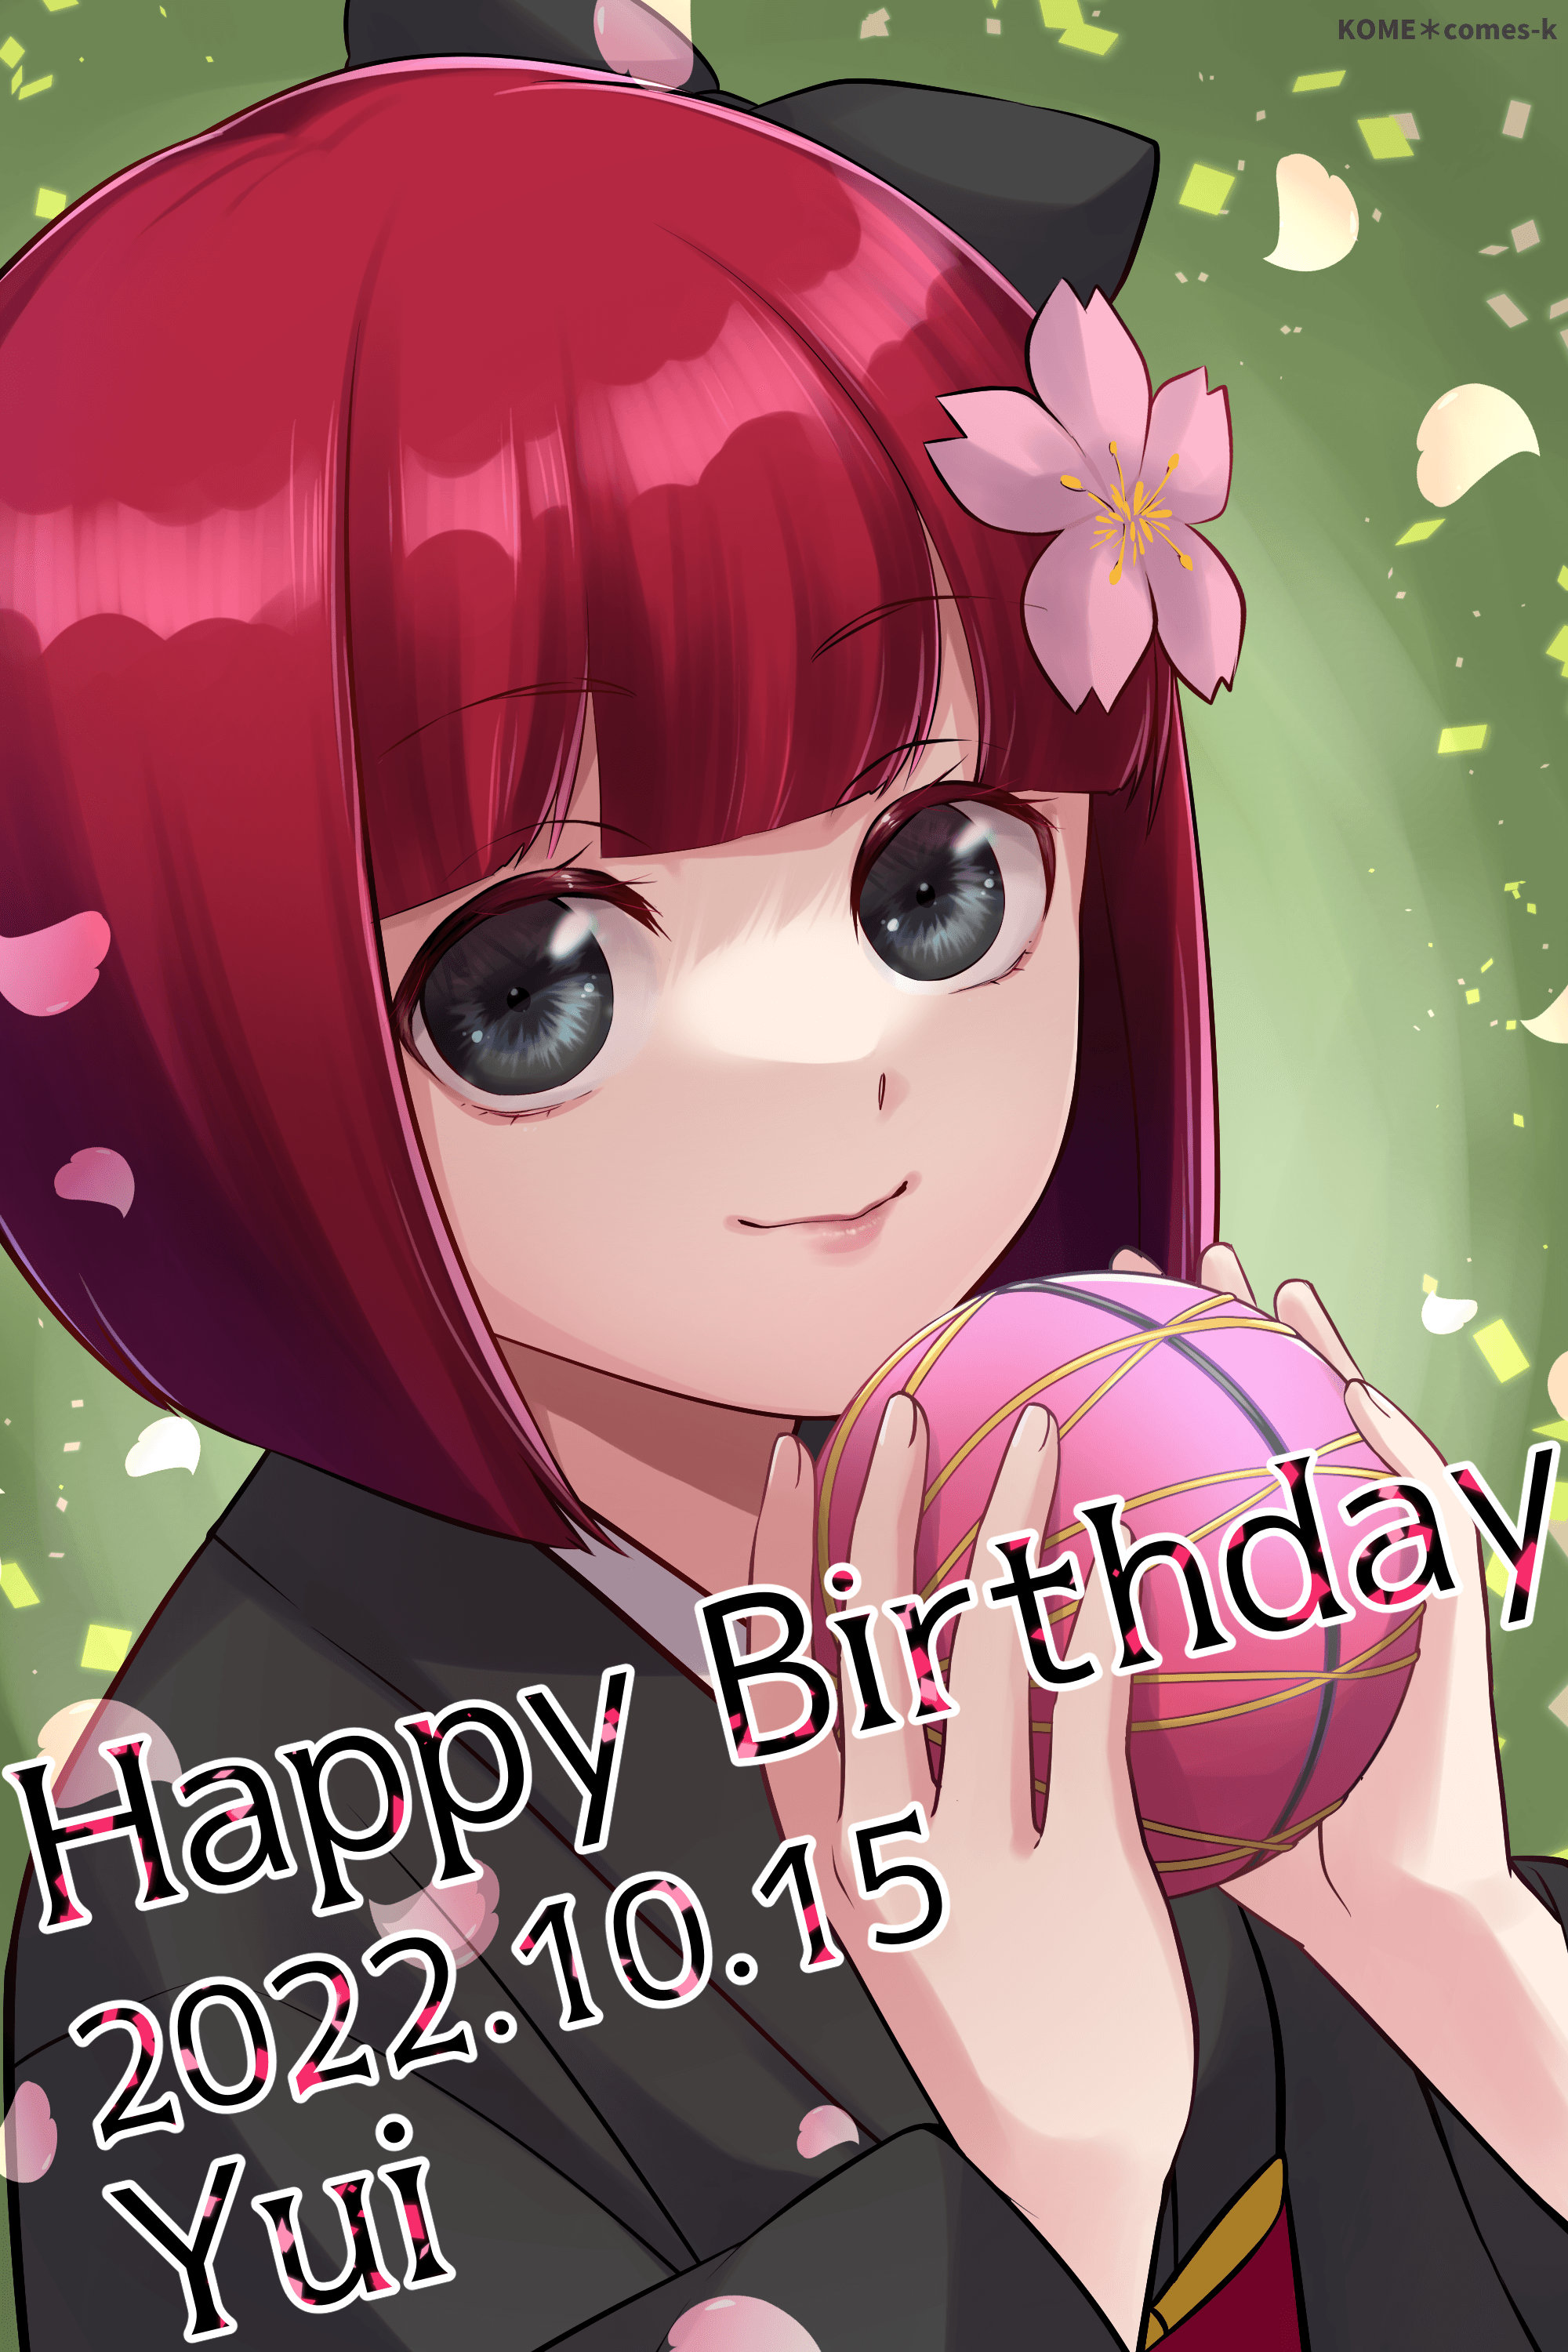 Yui'sbirthday!